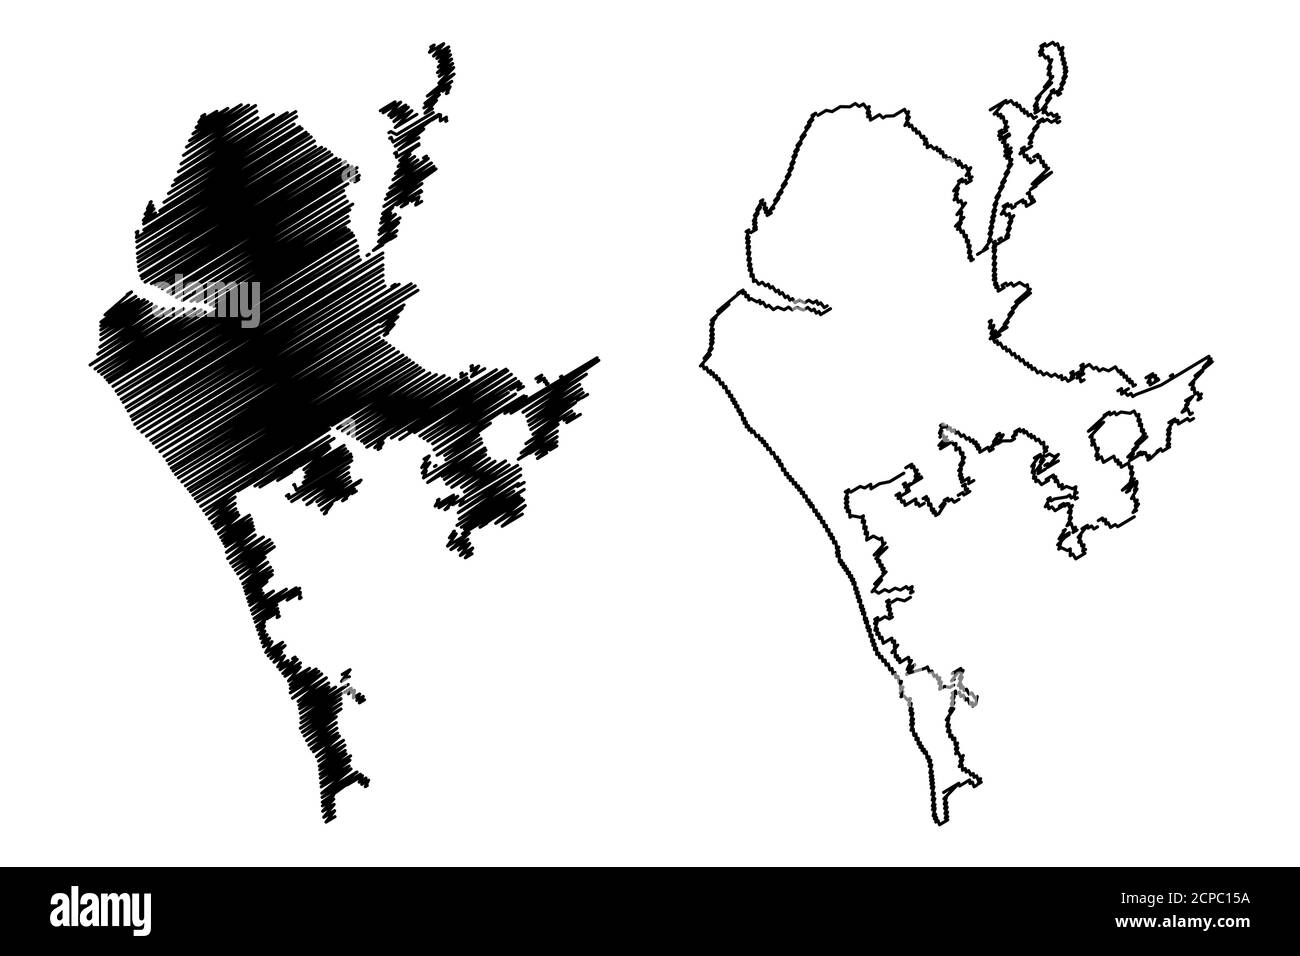 Concepcion Stadt (Republik Chile, Bio Bio Region) Karte Vektor Illustration, scribble Skizze Stadt La Concepcion de Maria Purísimadel Nuevo Extremo Stock Vektor